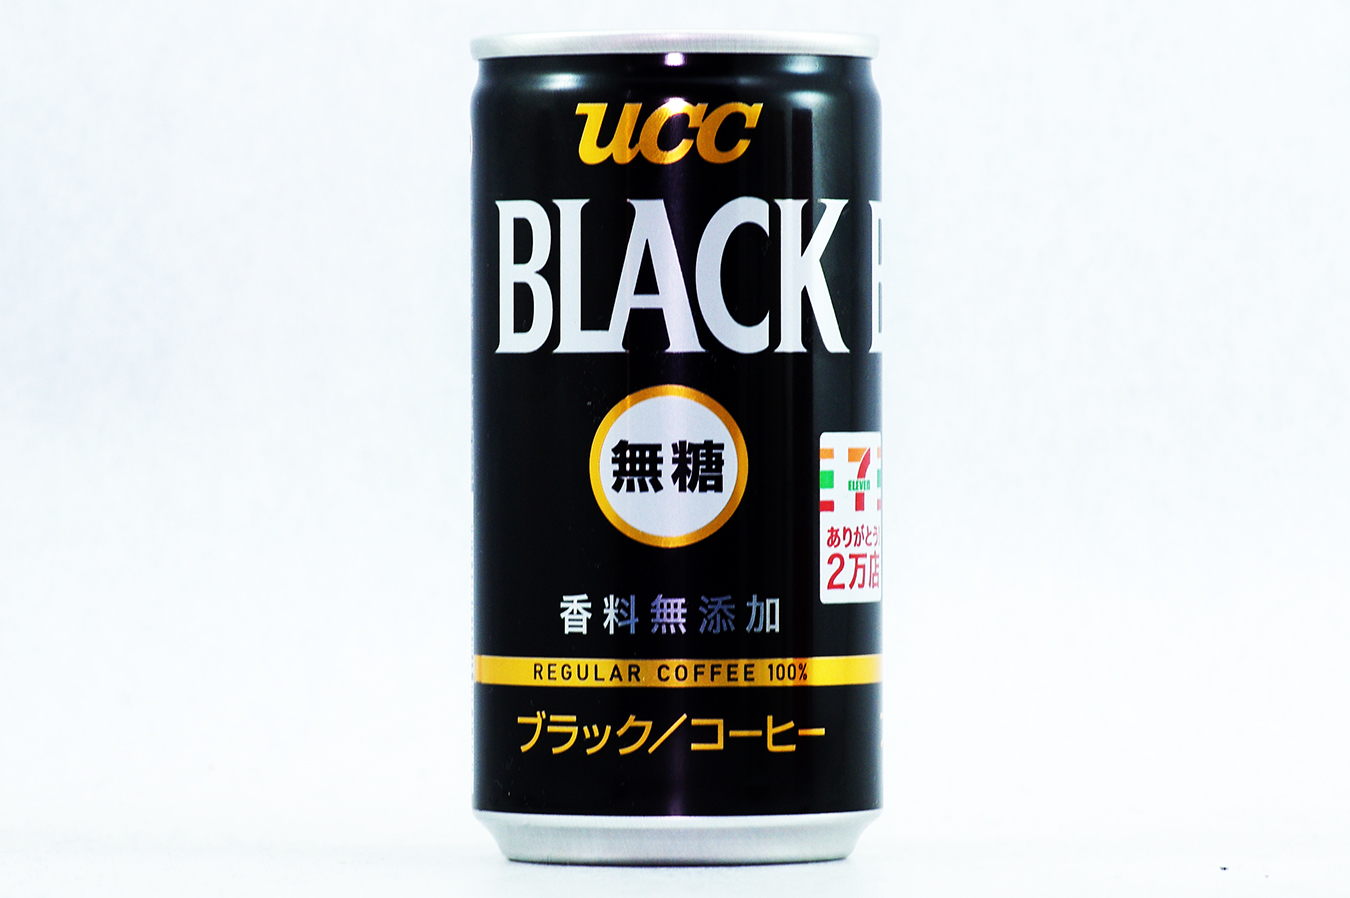 UCC ブラック無糖 セブンイレブン2万店達成記念缶 2017年10月